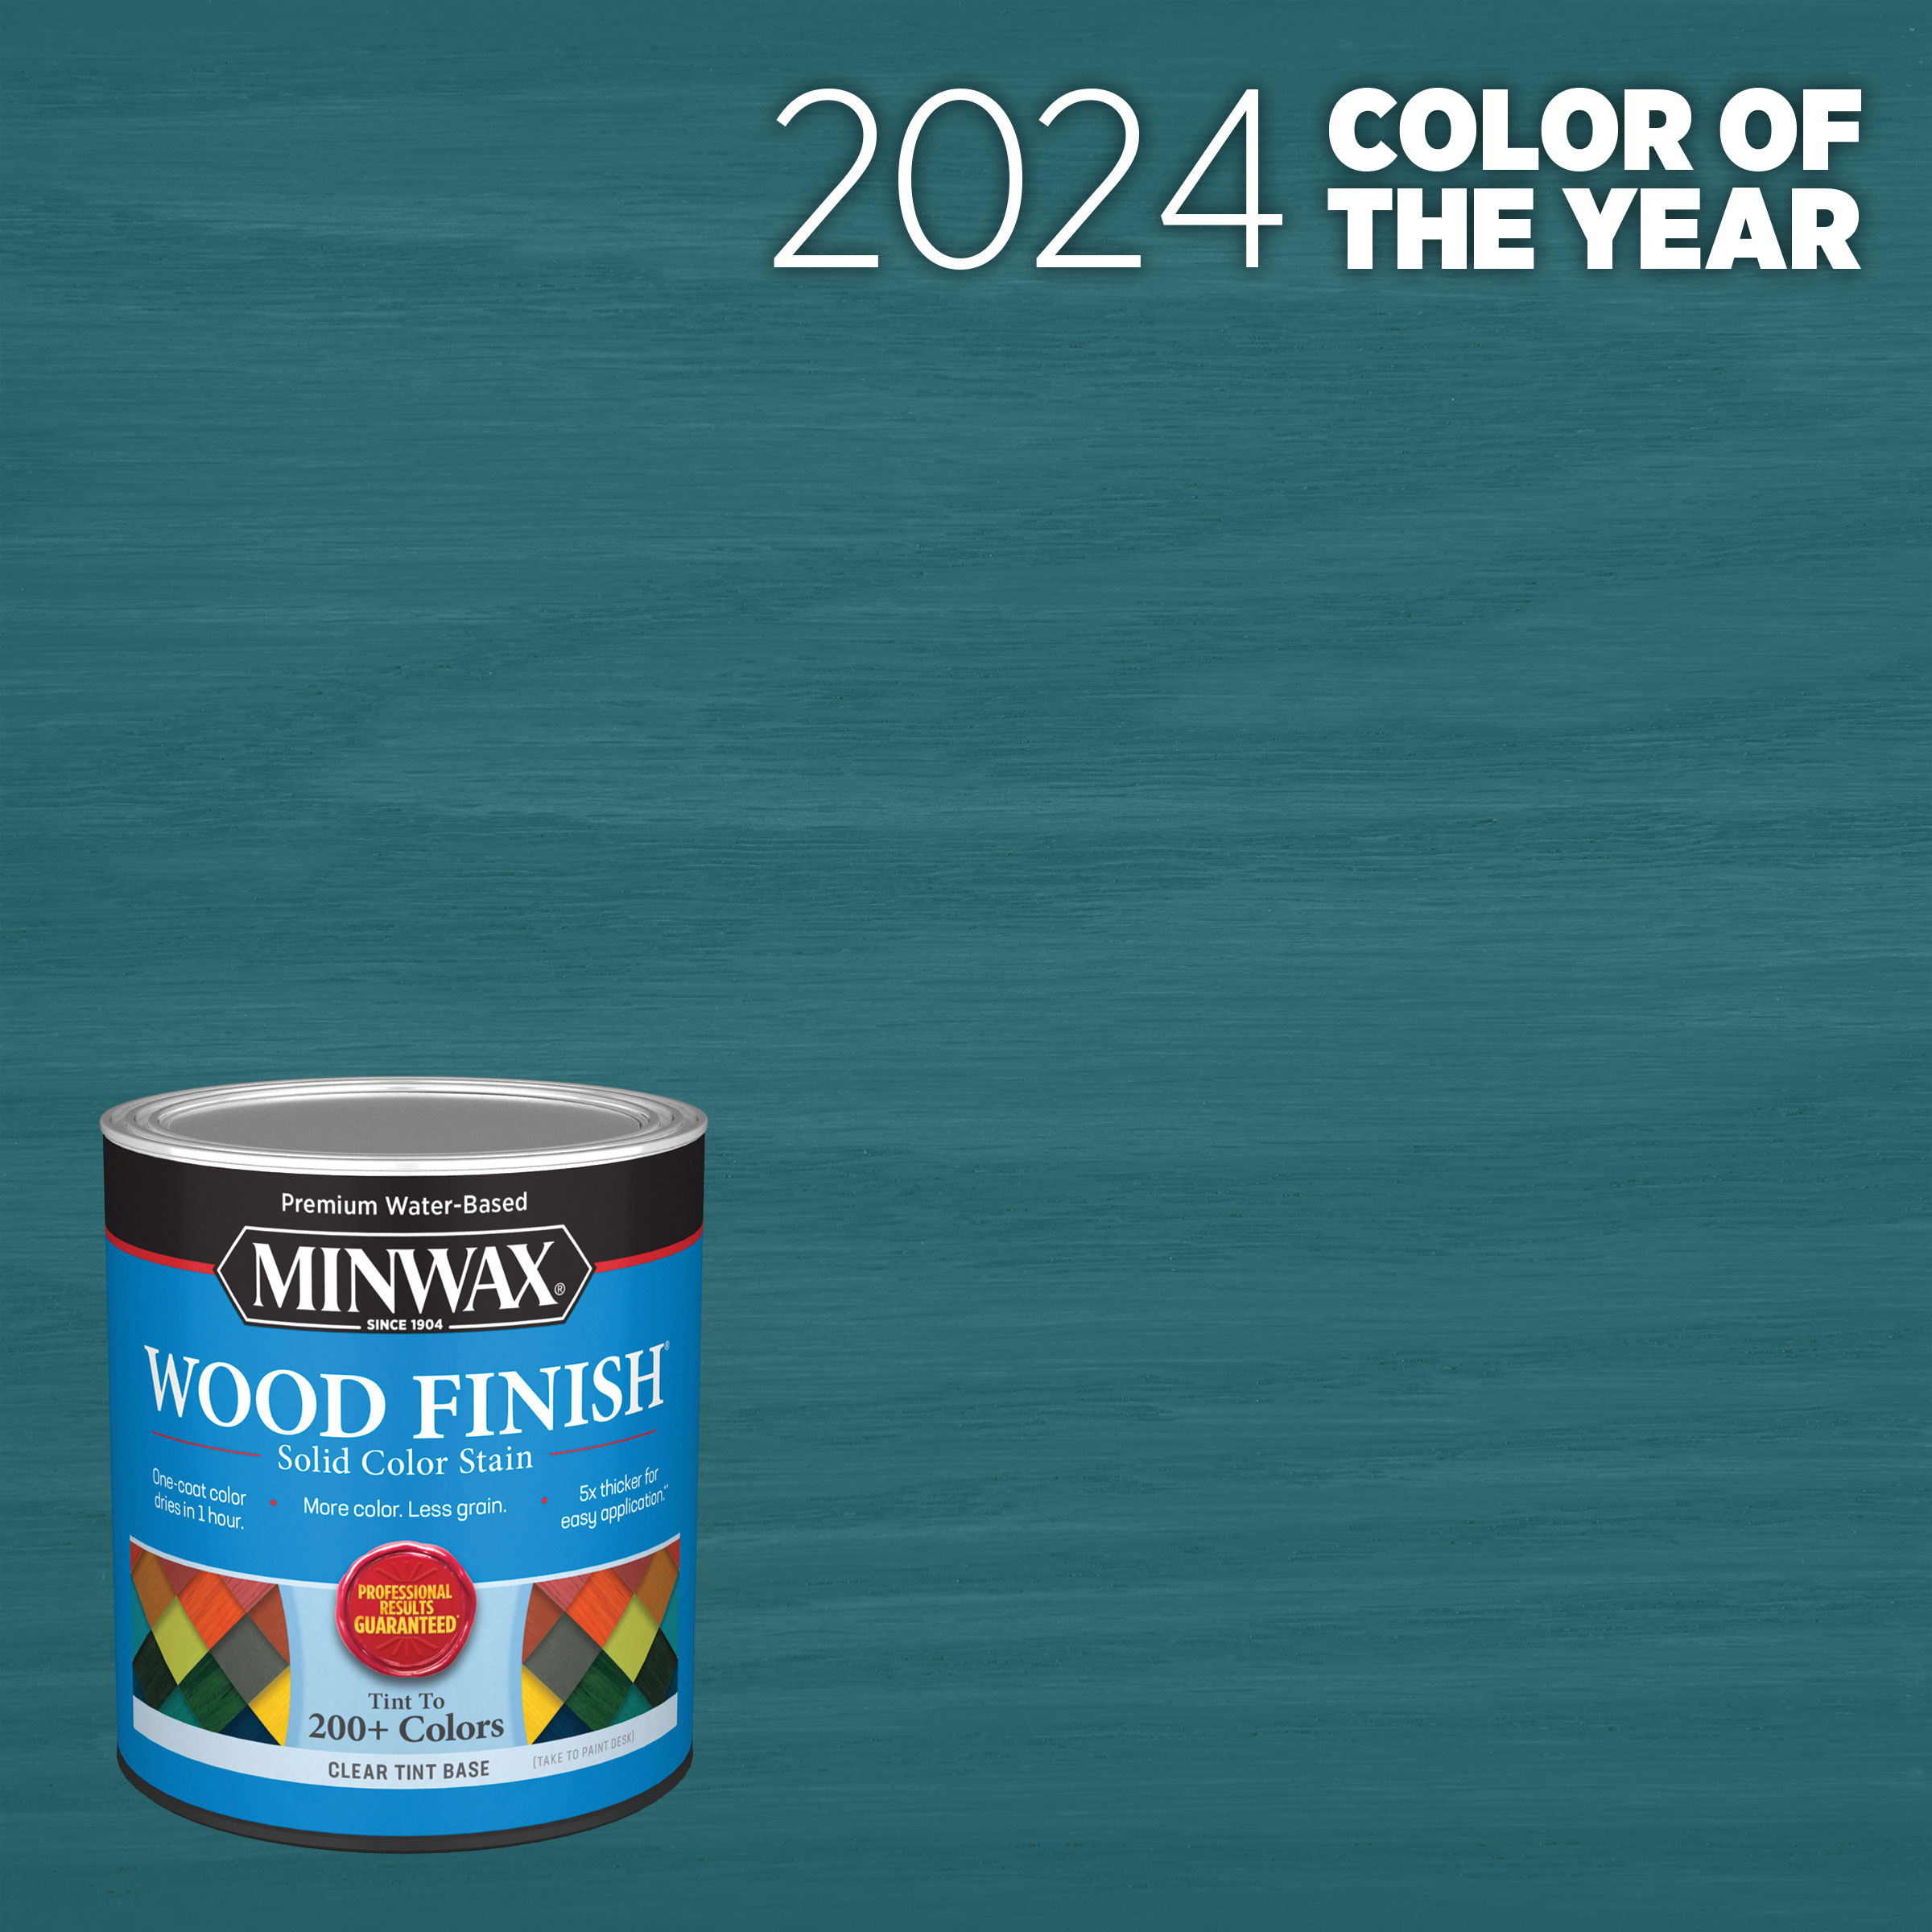 Sansin Ocean Bay Blue 74 Exterior Wood Stain Colour